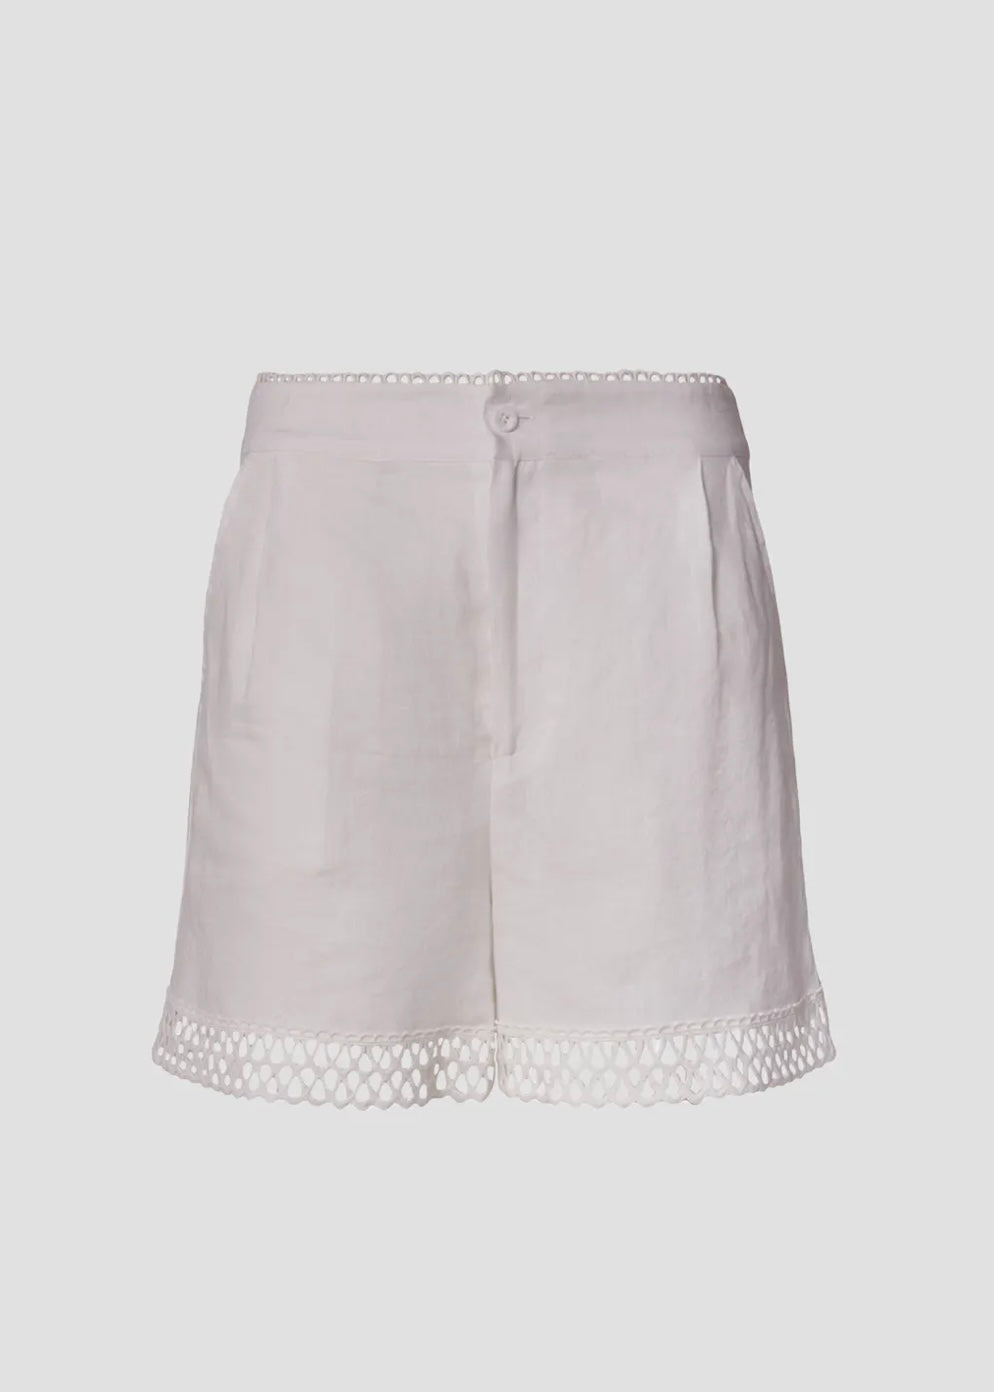 Camilla Pihl Agios shorts - White